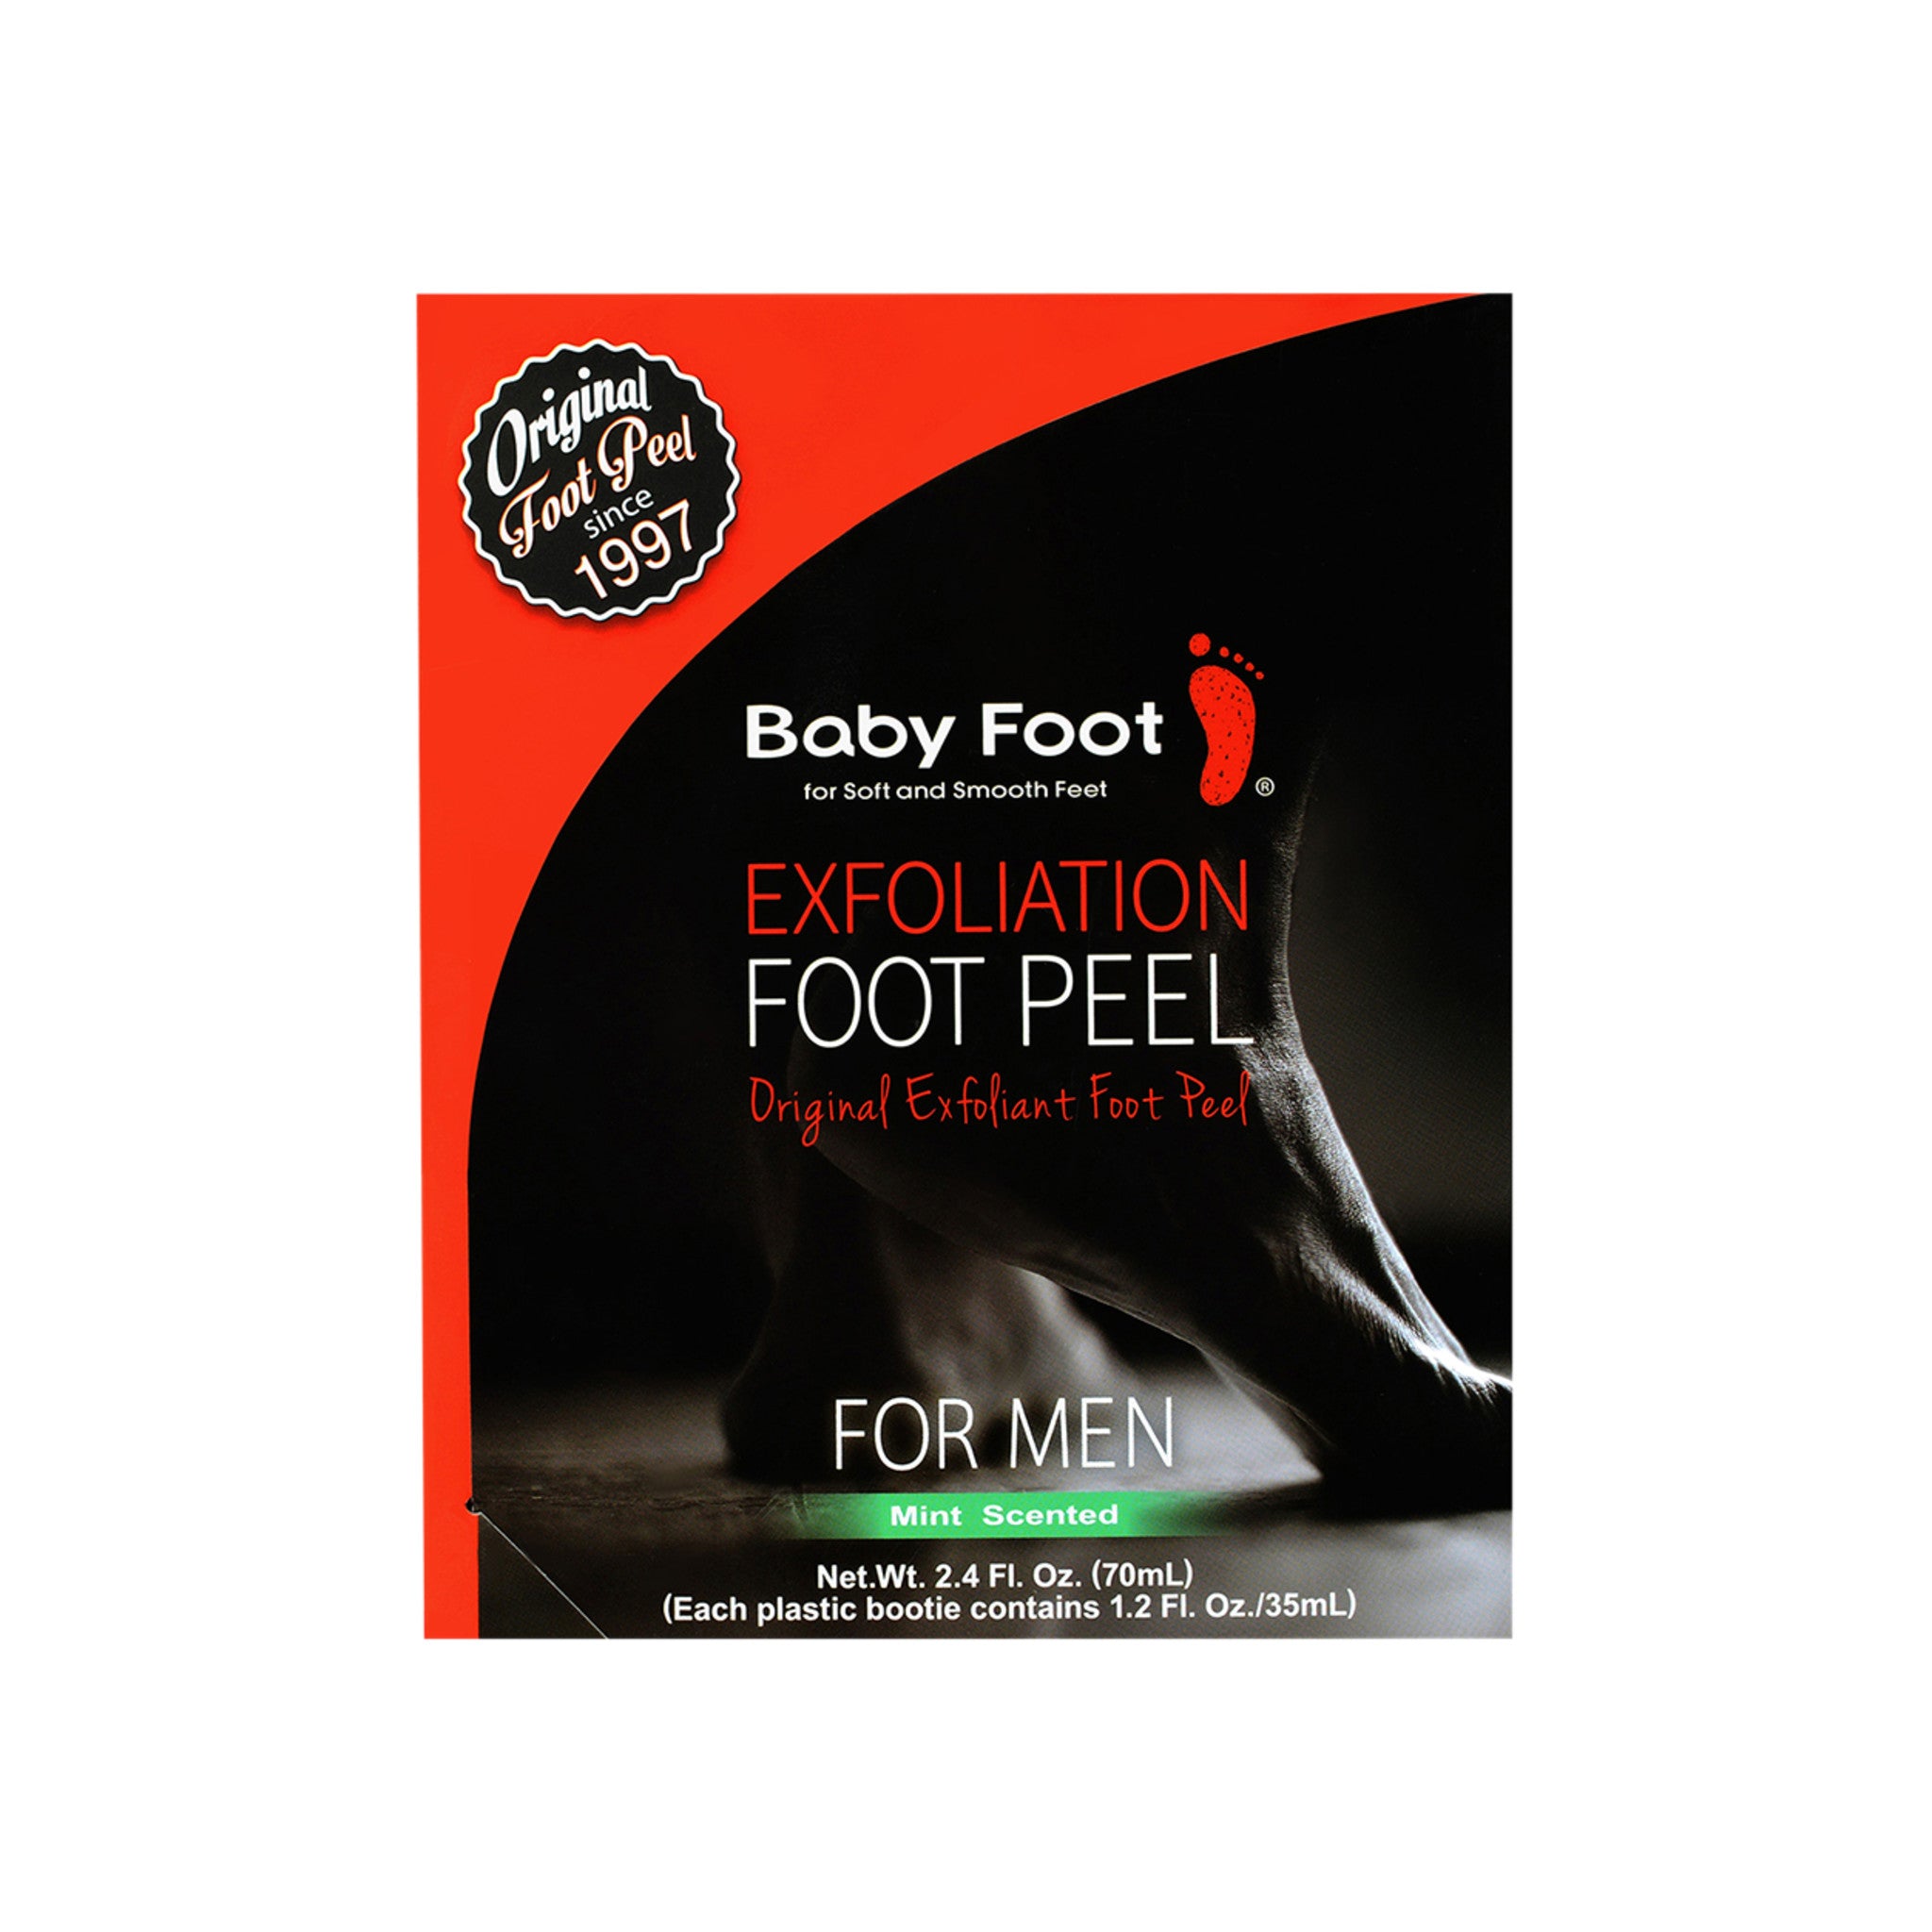 Baby Foot Baby Foot Exfoliation Foot Peel For Men main image.